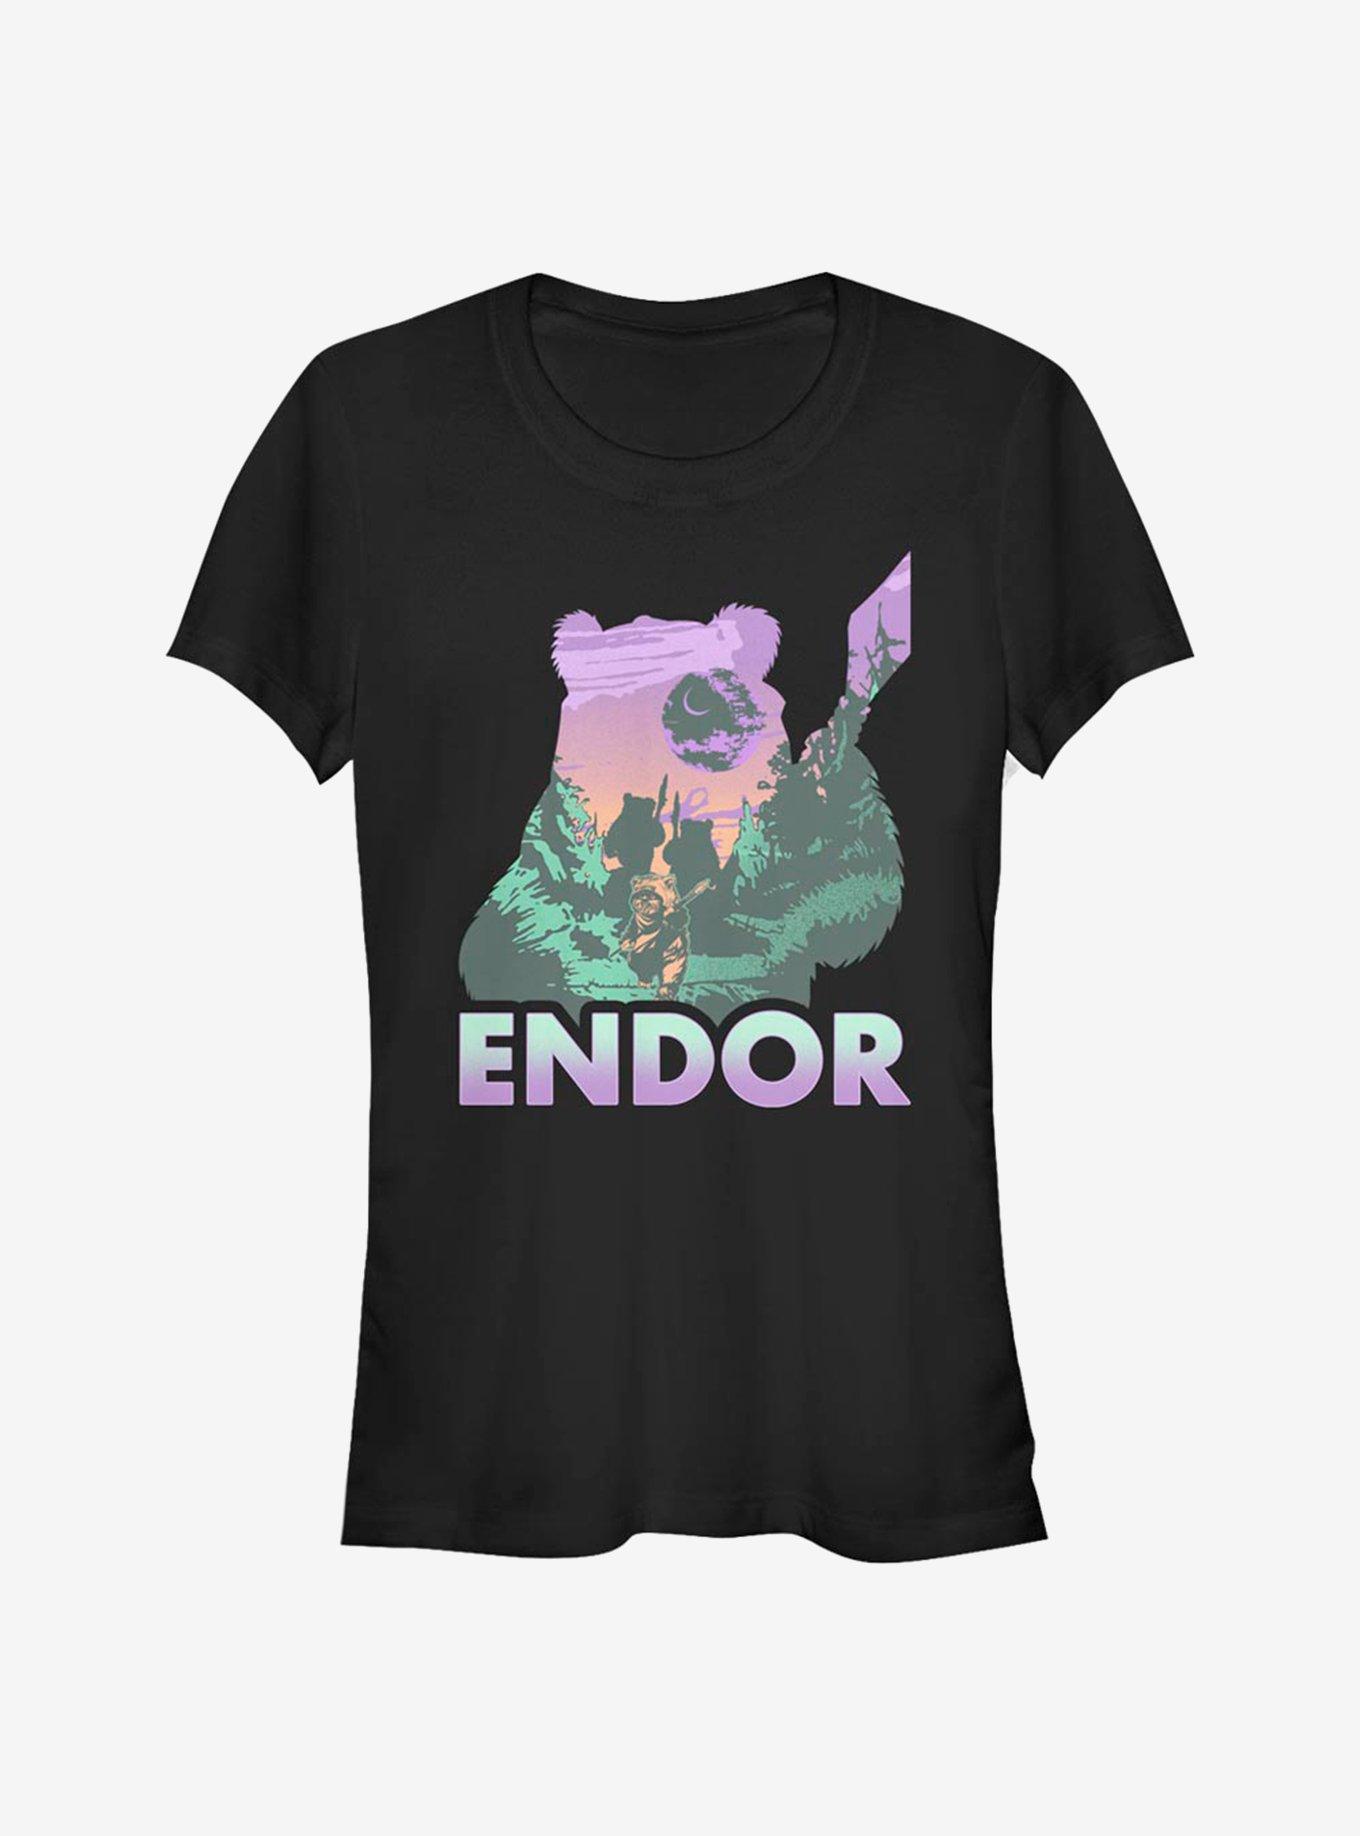 Star Wars Endor Silhouette Girls T-Shirt